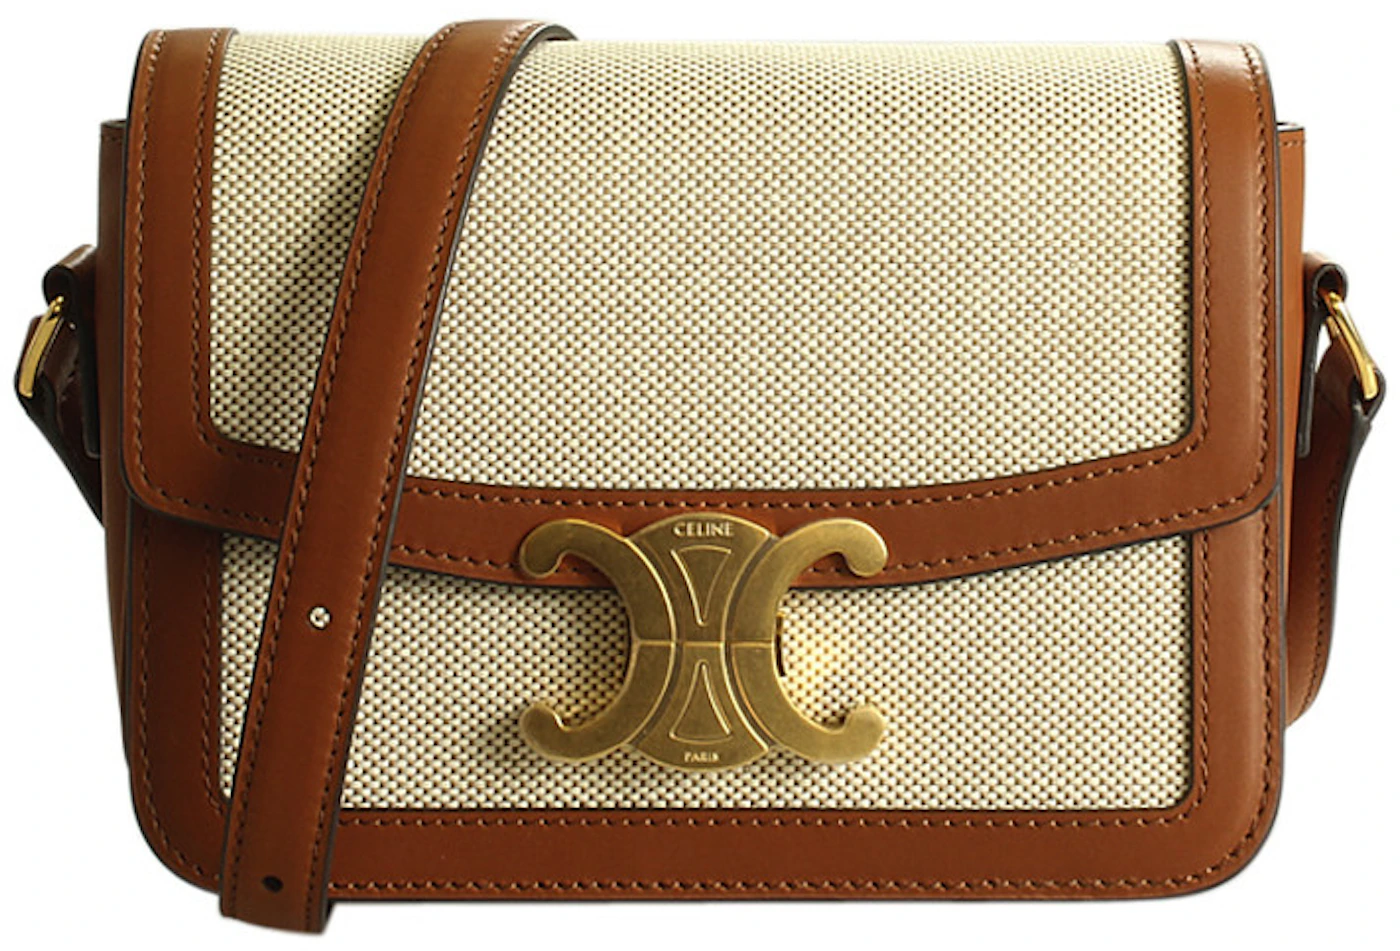 Triomphe leather handbag Celine Beige in Leather - 31373356